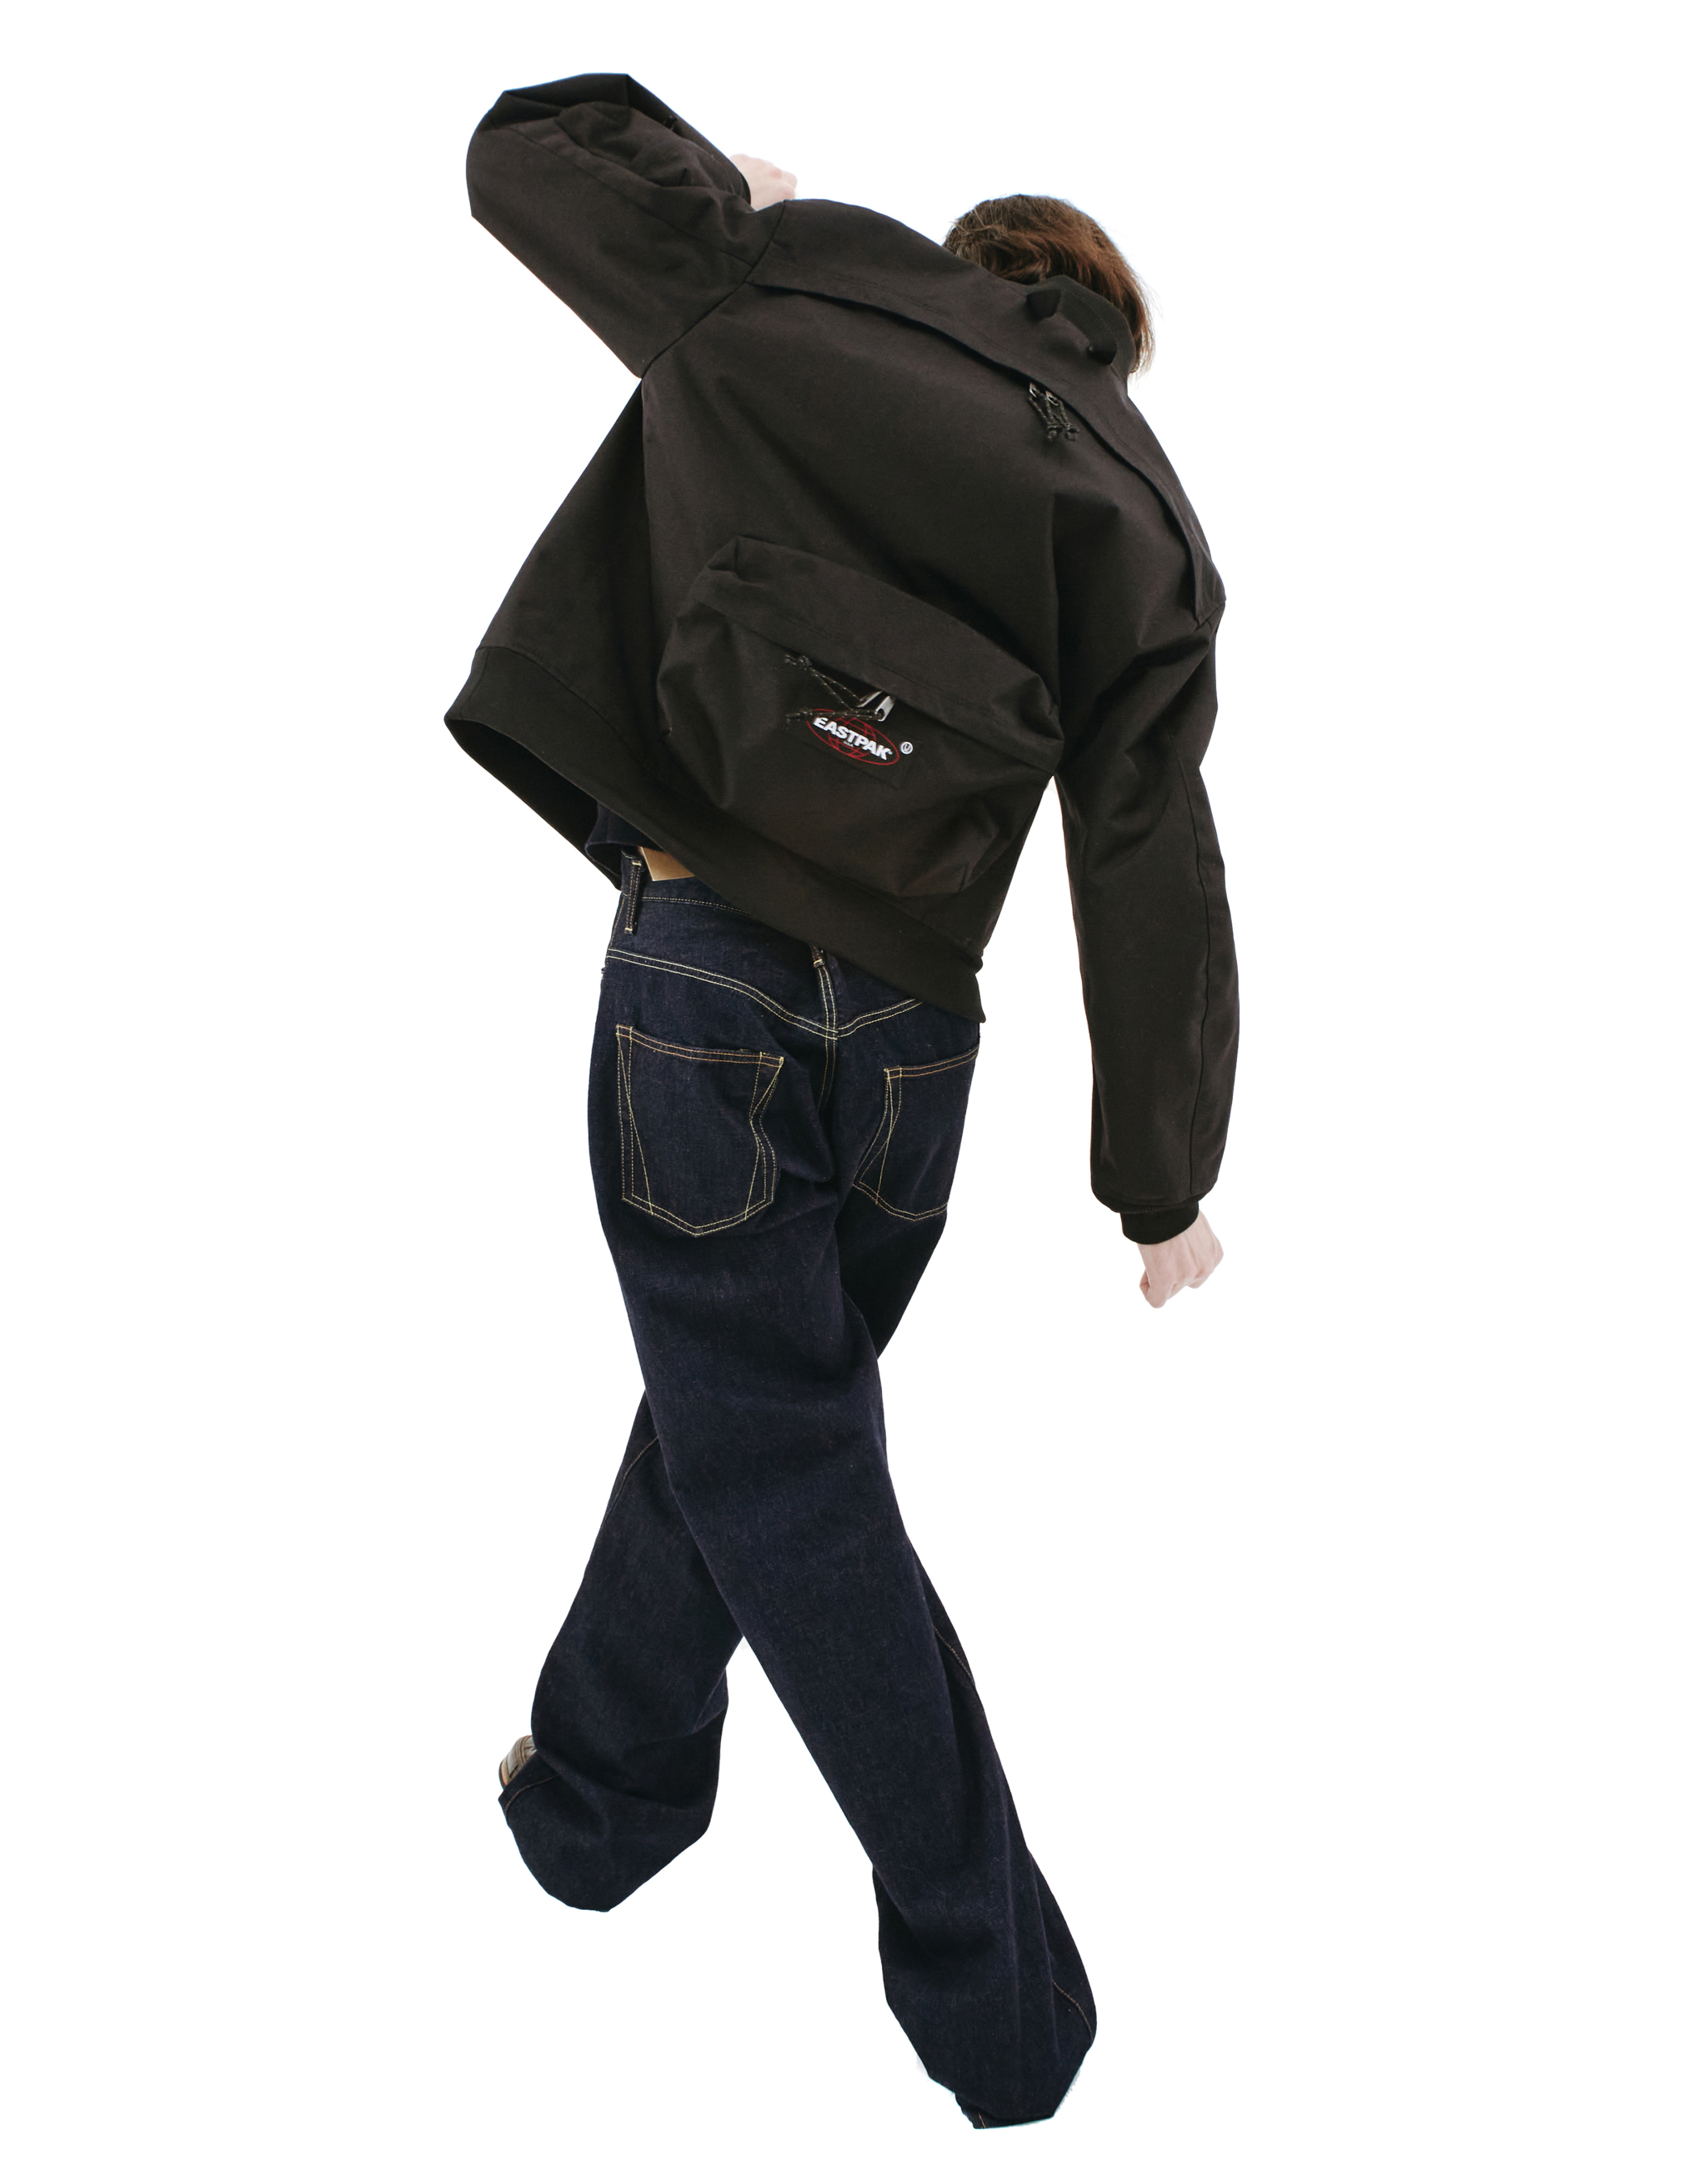 Бомбер Undercover x Eastpak c накладным карманом Undercover UC2A4205/blk, размер 4 UC2A4205/blk - фото 4